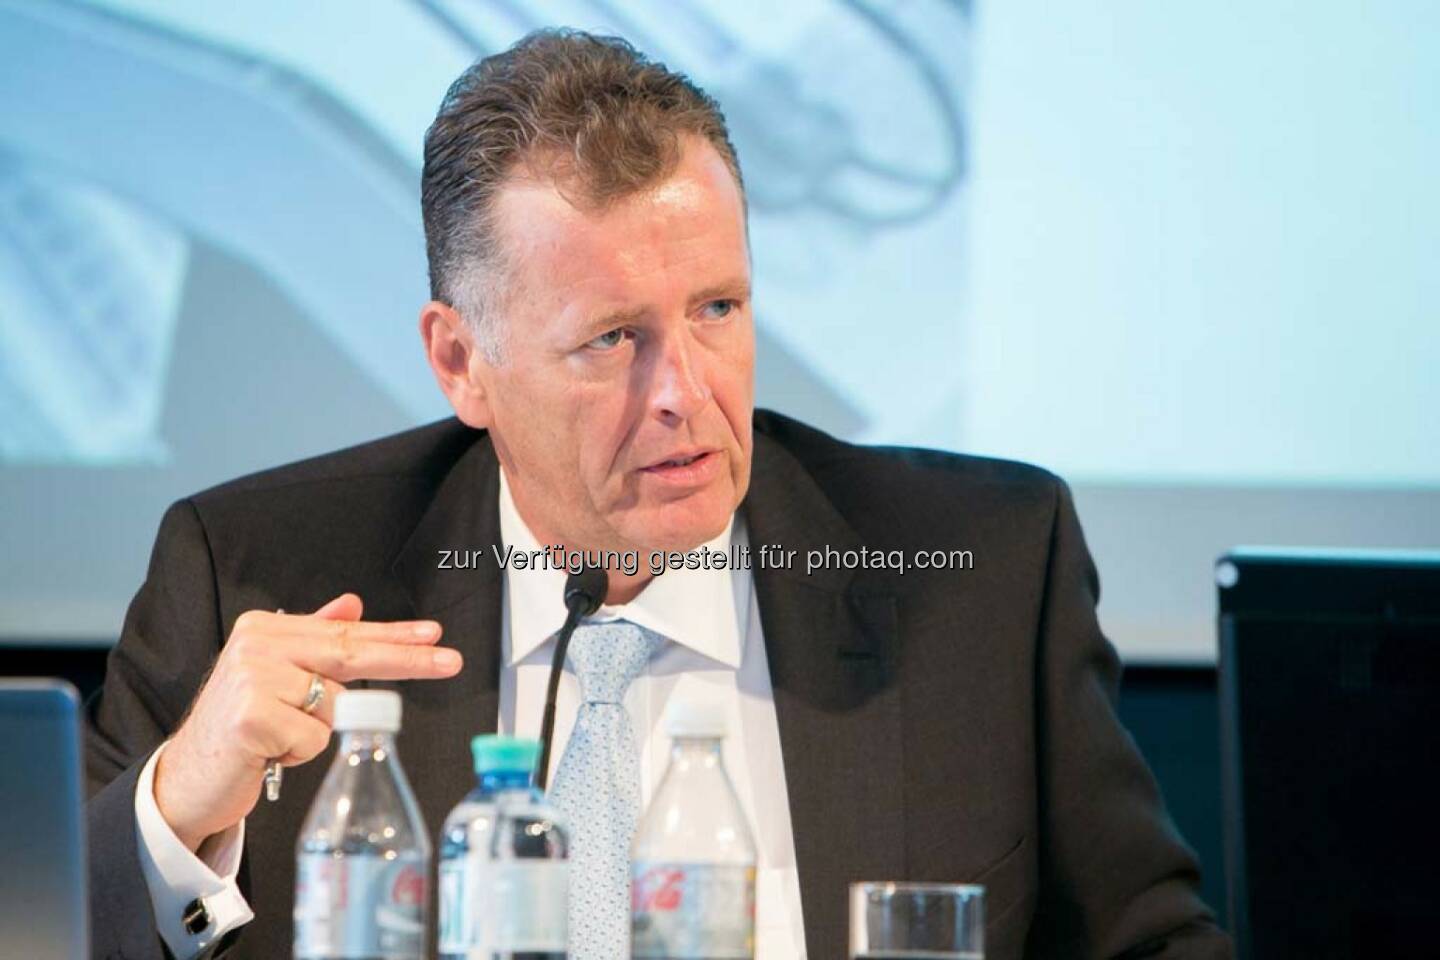 Thomas Fahnemann (CEO Semperit)